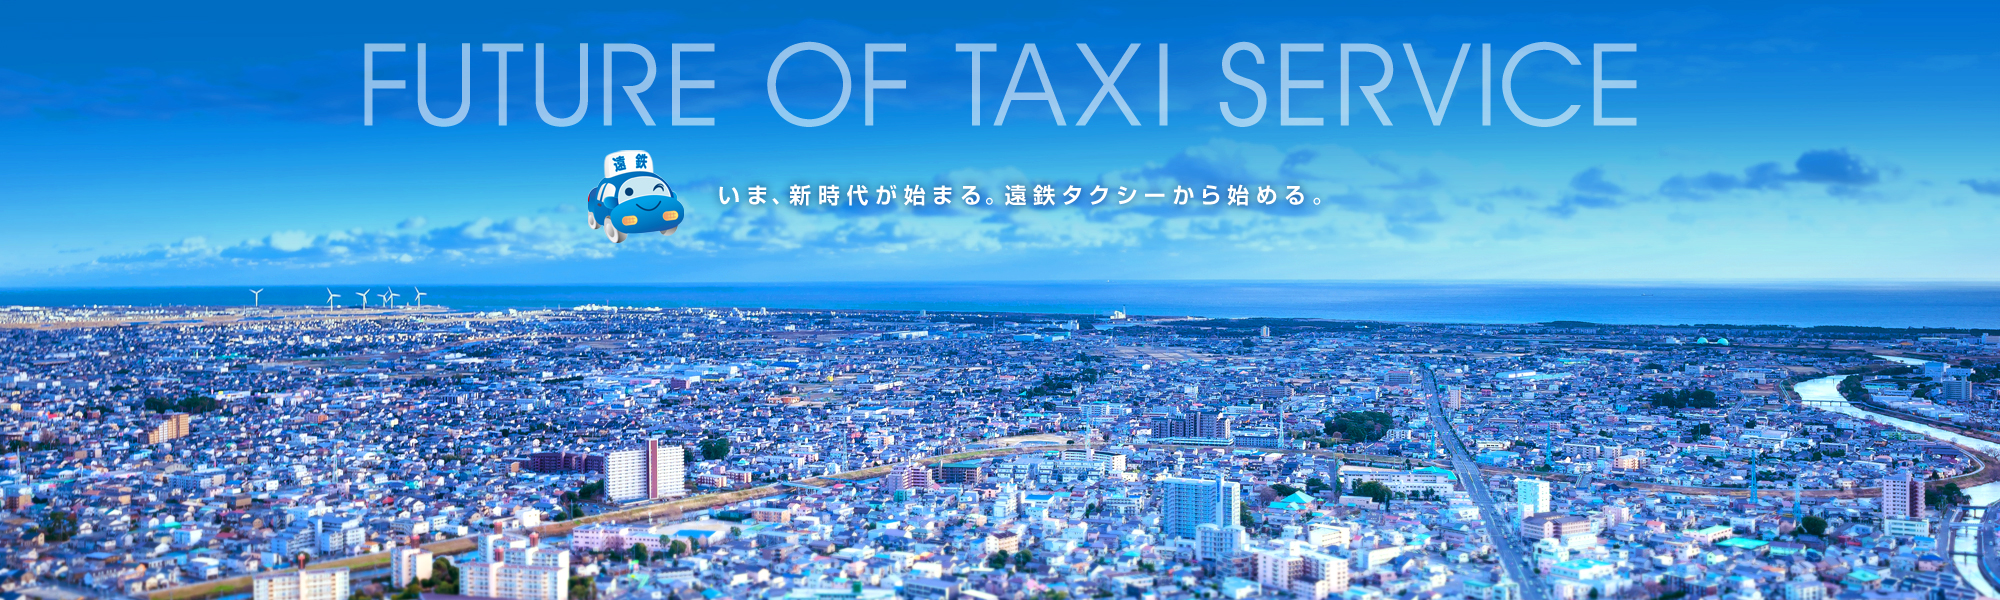 FUTURE OF TAXI SERVICE　いま、新時代が始まる。遠鉄タクシーから始める。